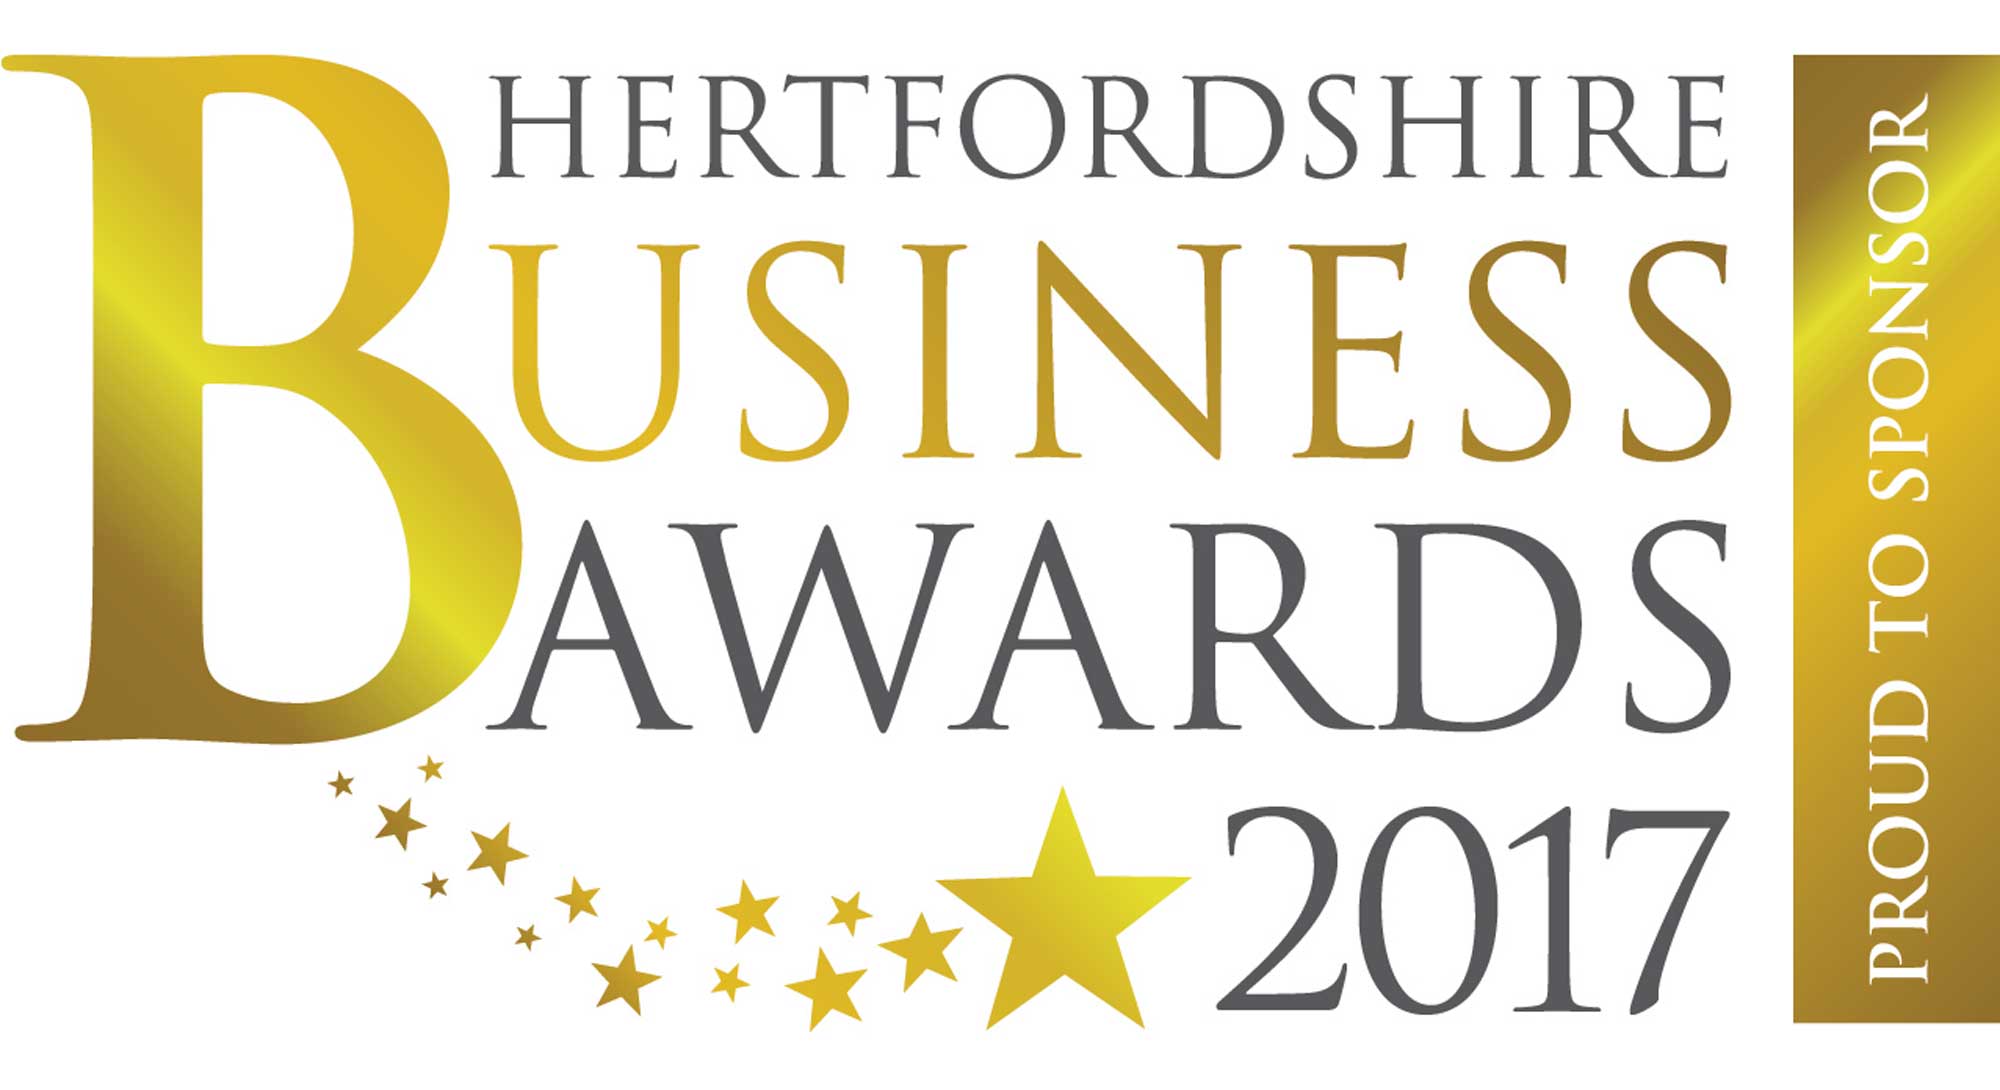 Hertfordshire business awards logo